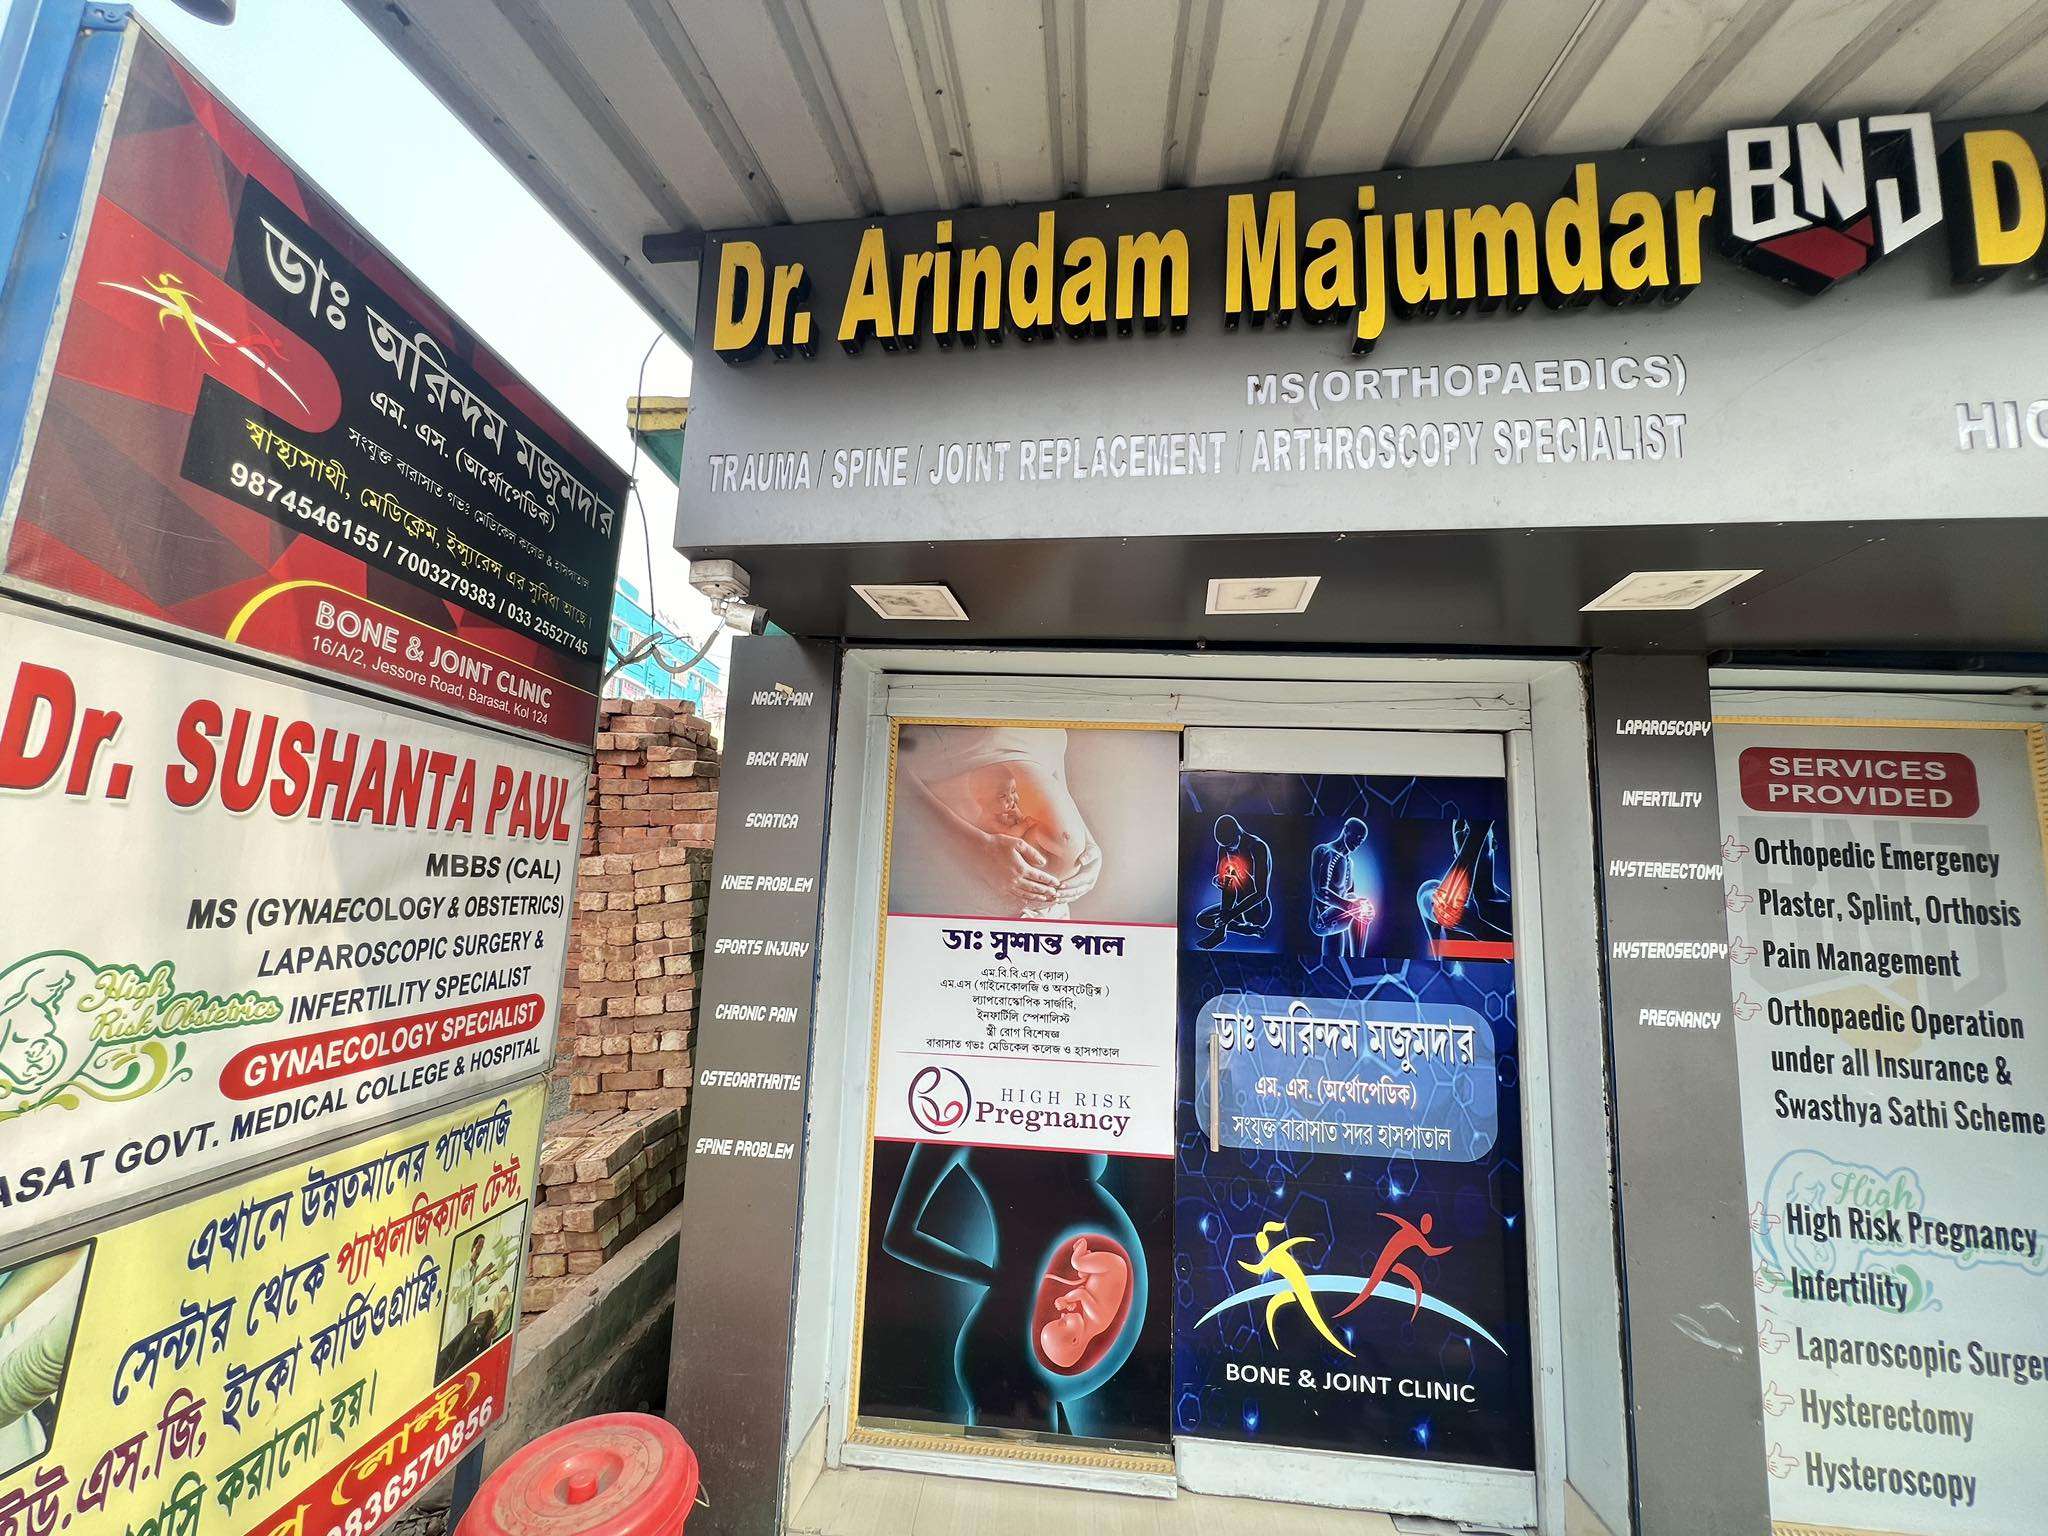 Dr Arindam Majumdar's chamber